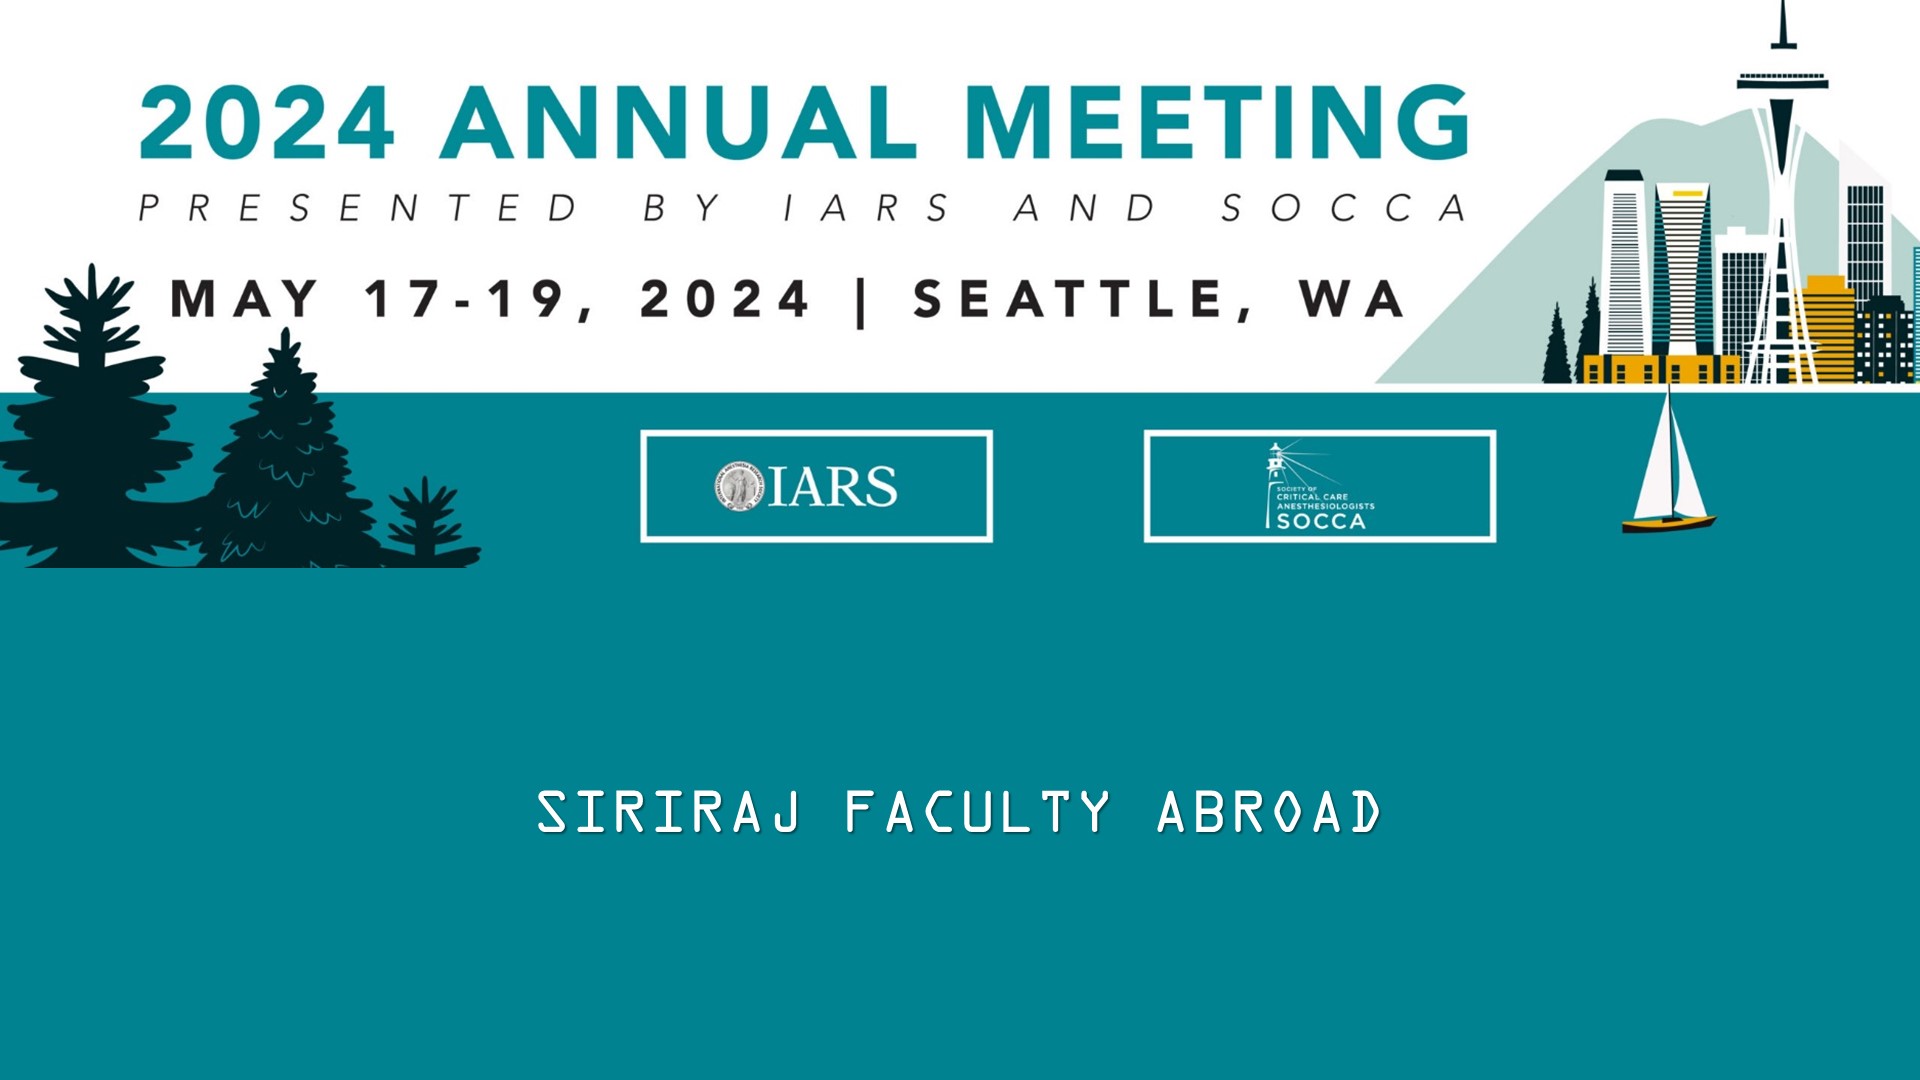 Siriraj Faculty Abroad at IARS Meeting 2024 in USA